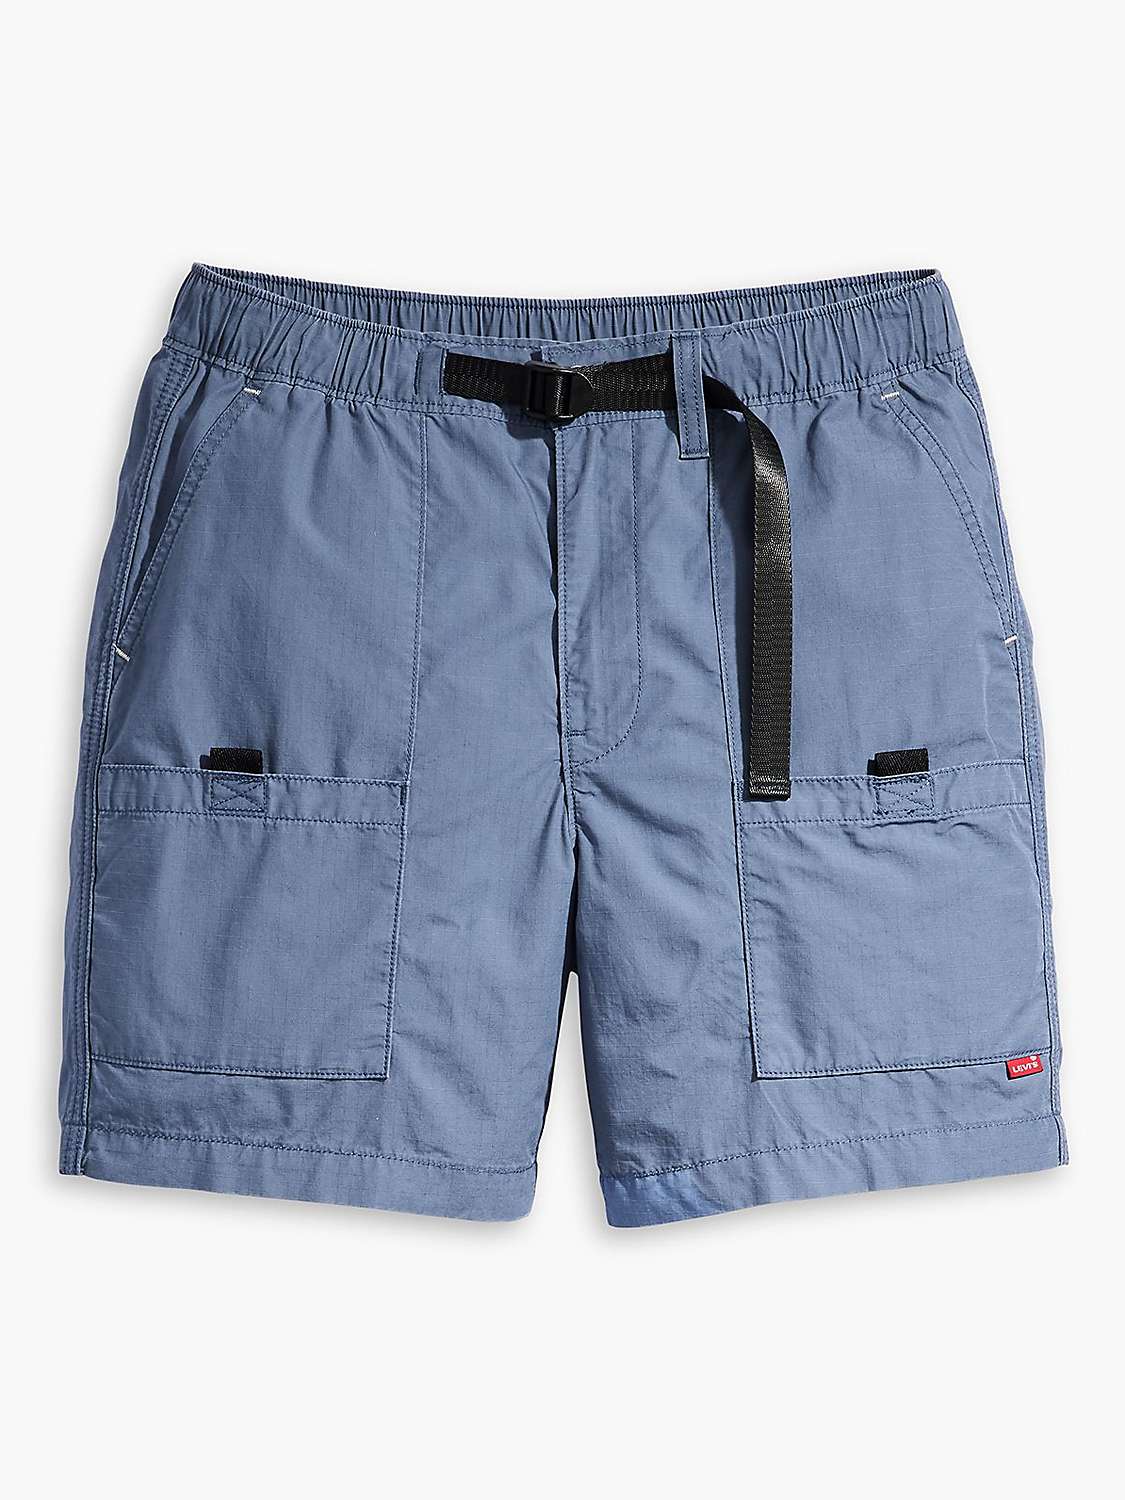 Buy Levi's Utility Belted Shorts, Indigo Online at johnlewis.com